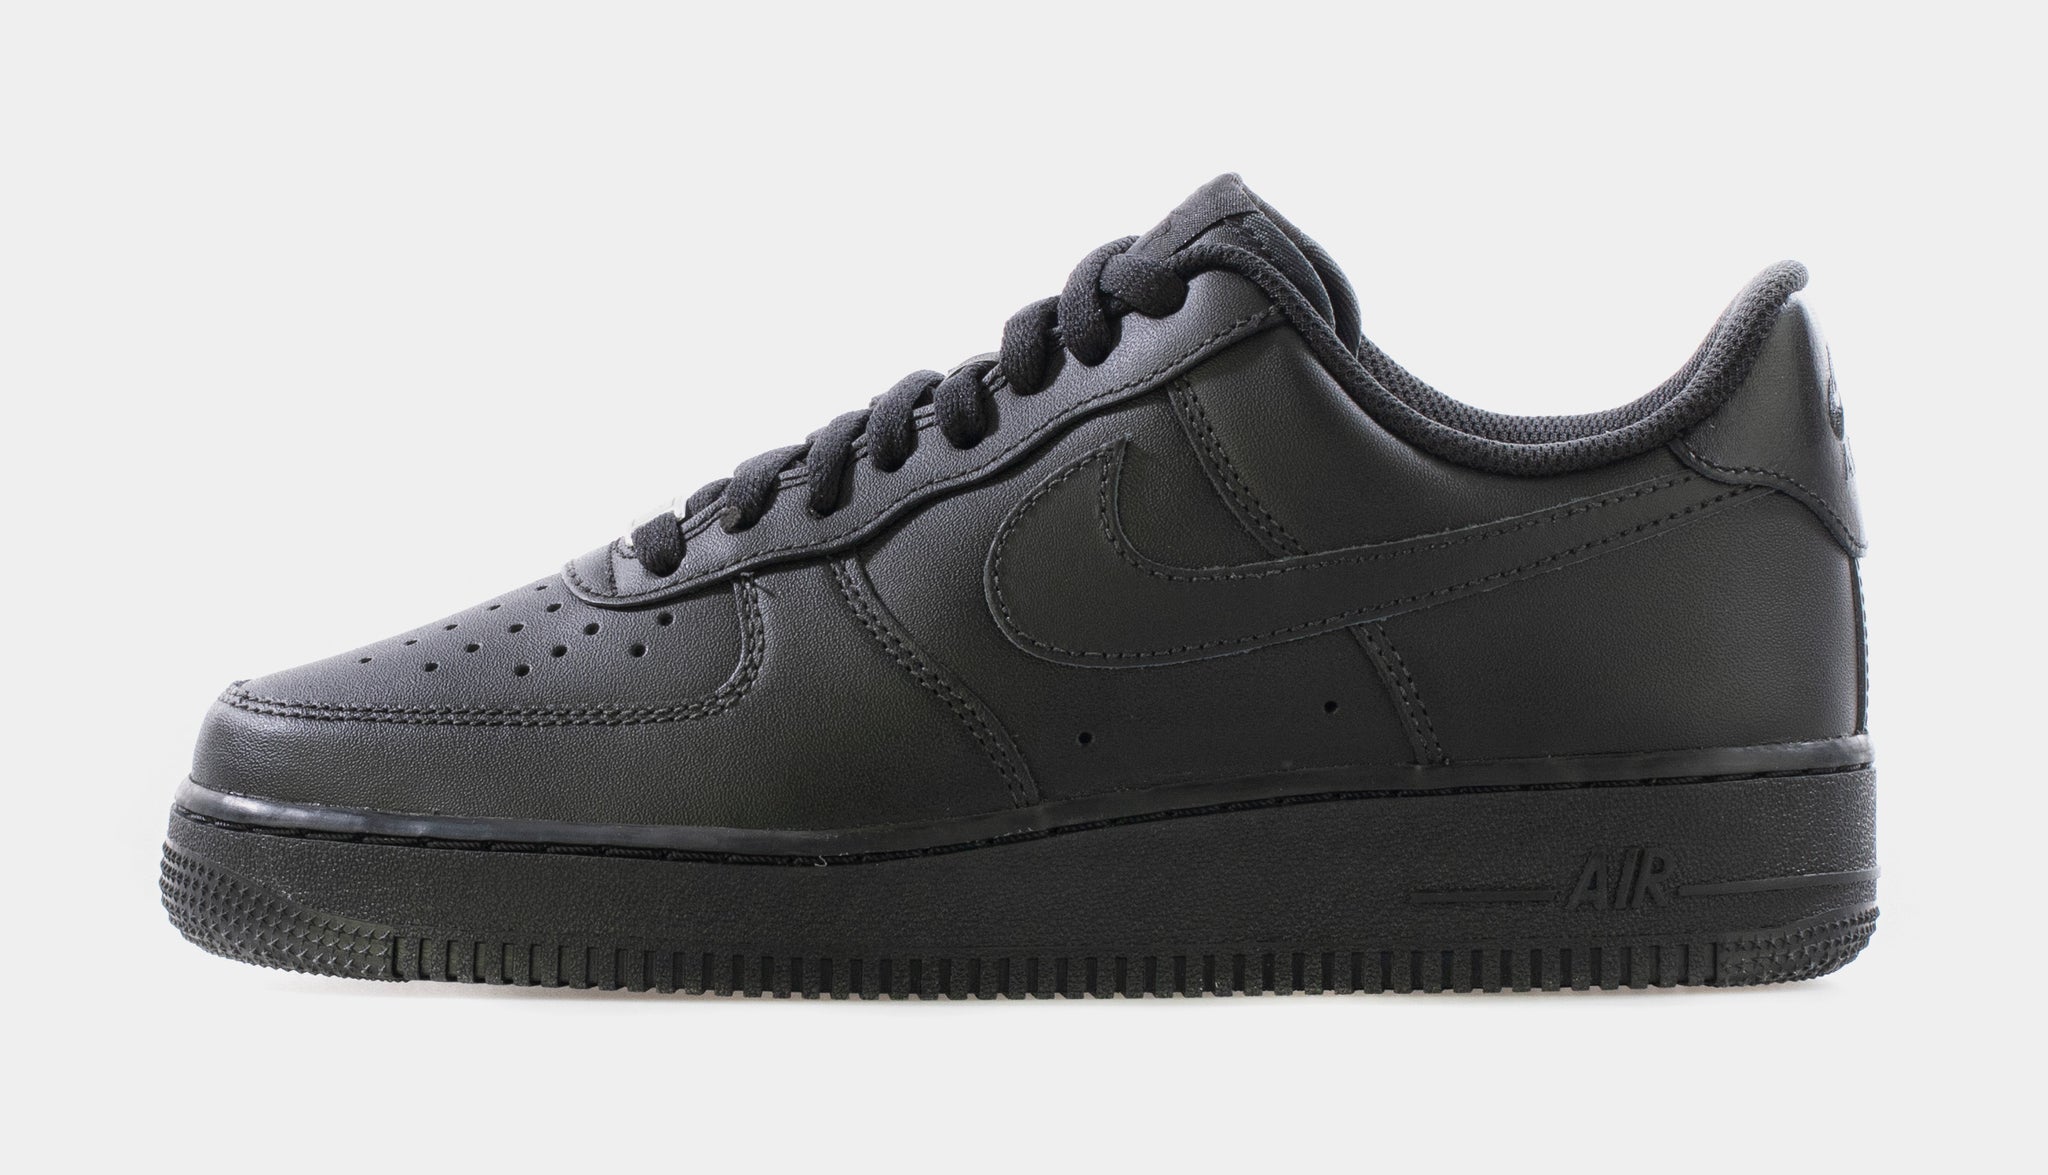 Nike Men Air Force 1 Black Shoes, Size: 7